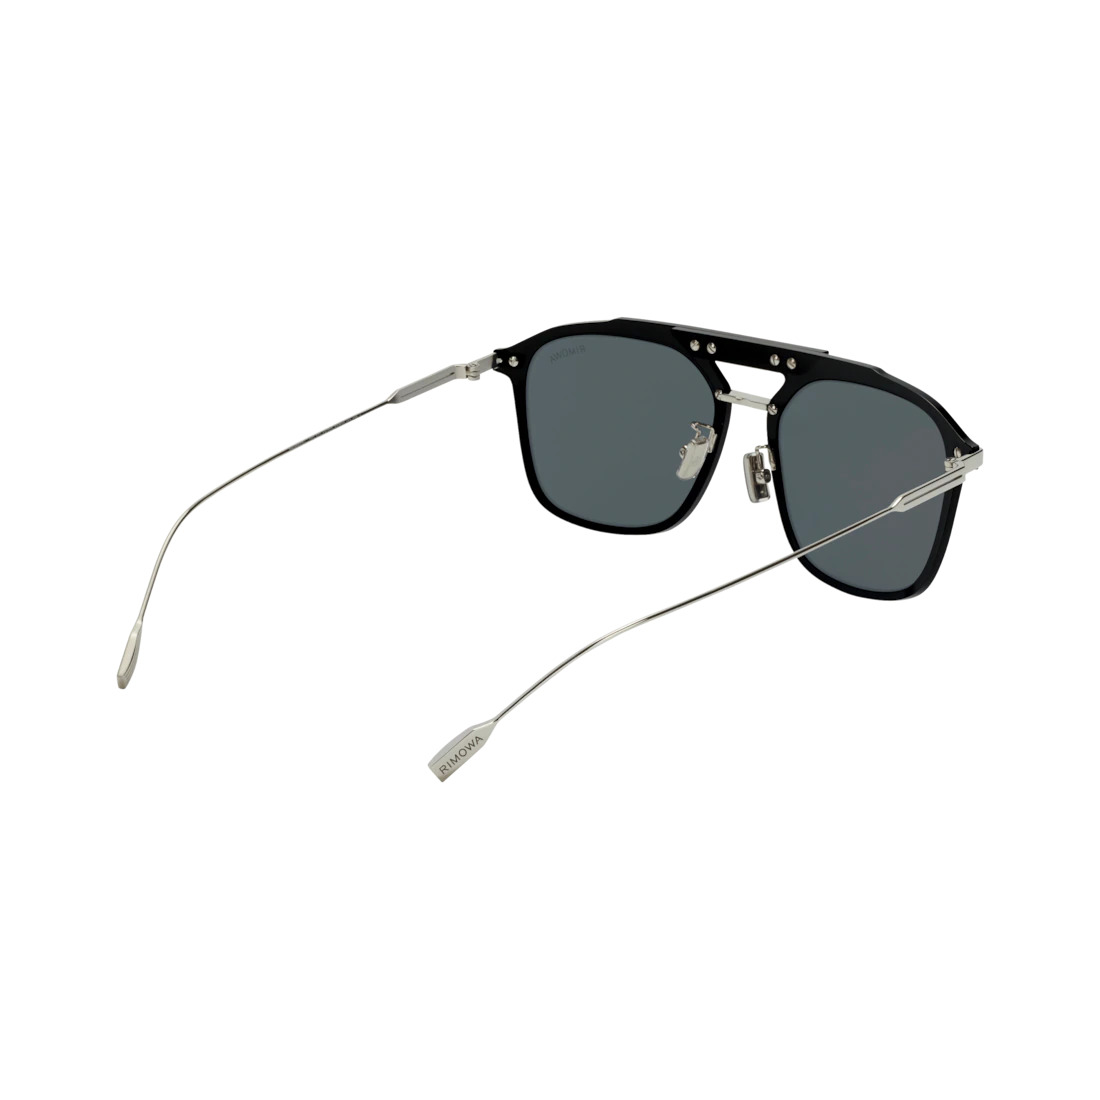 Eyewear Navigator Black Sunglasses - 7